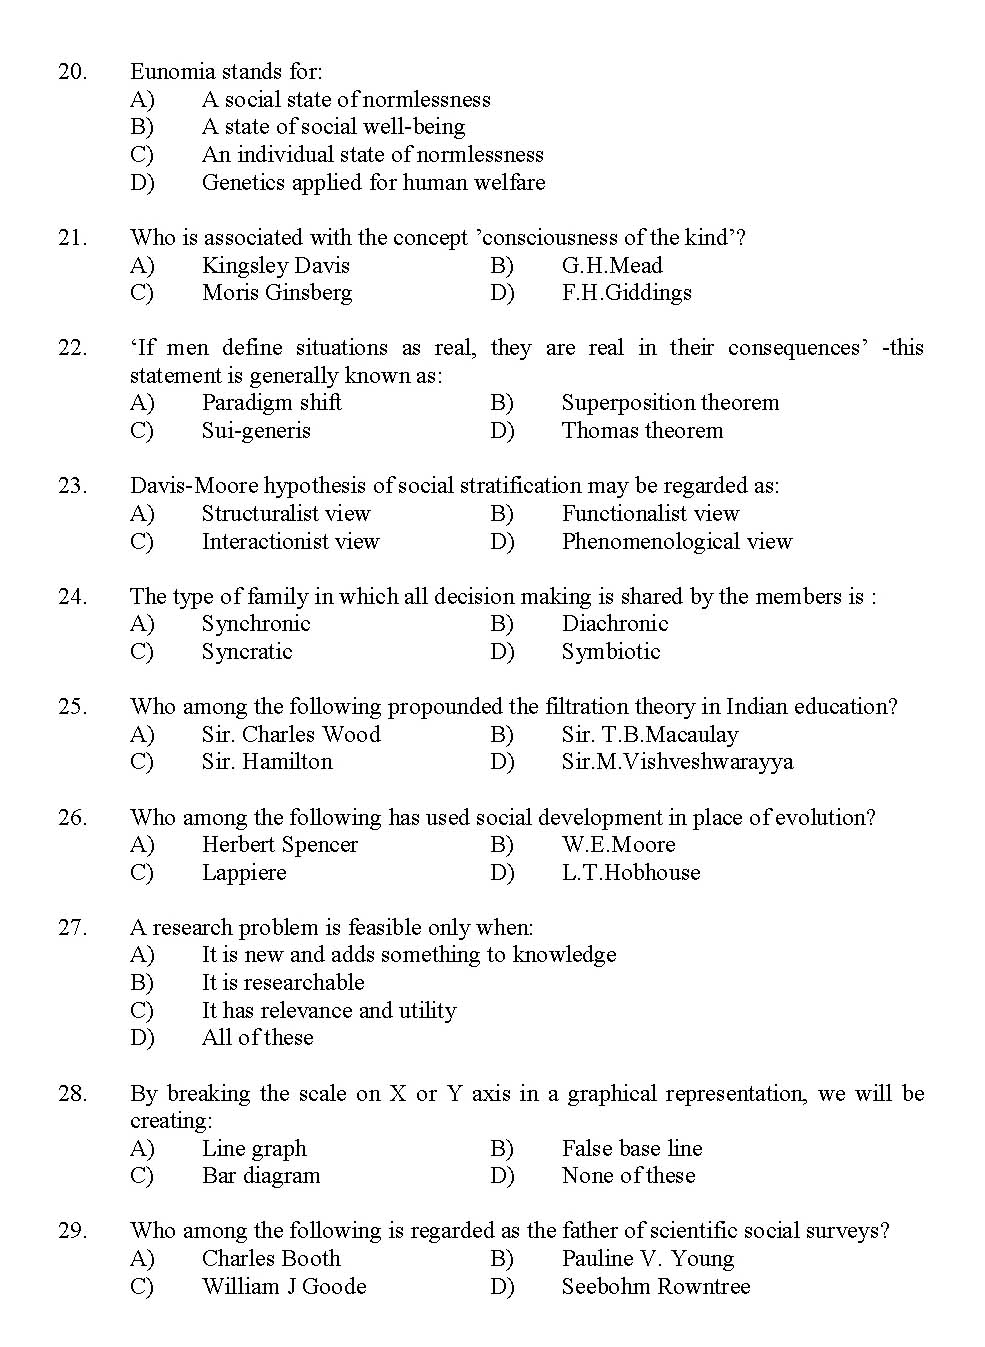 Kerala SET Sociology Exam 2012 Question Code 12930 3